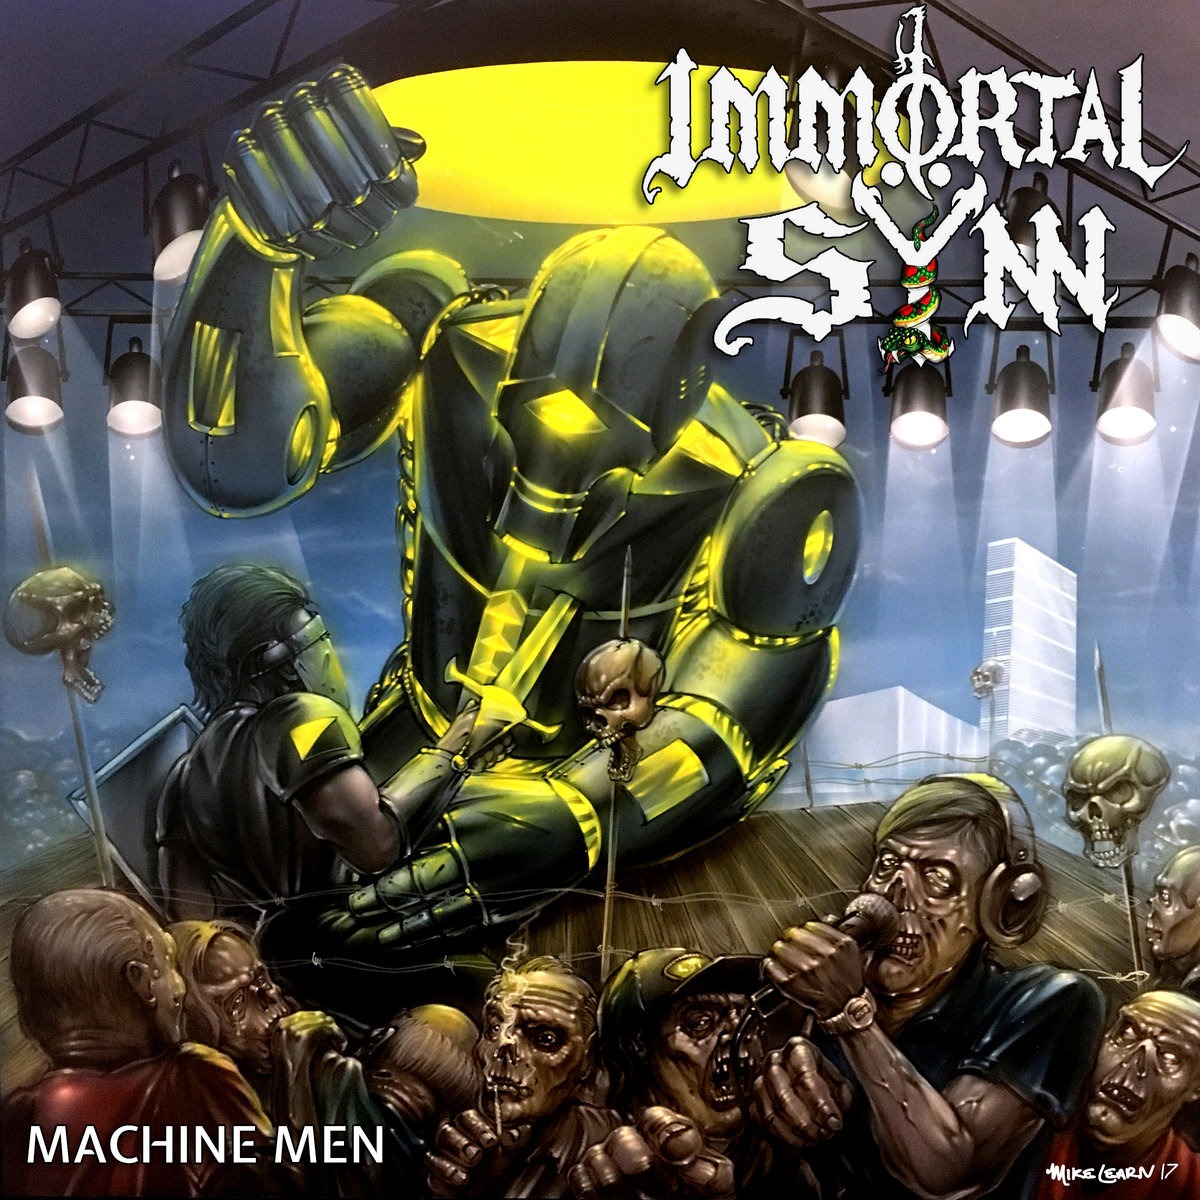 Immortal Synn's Machine Men